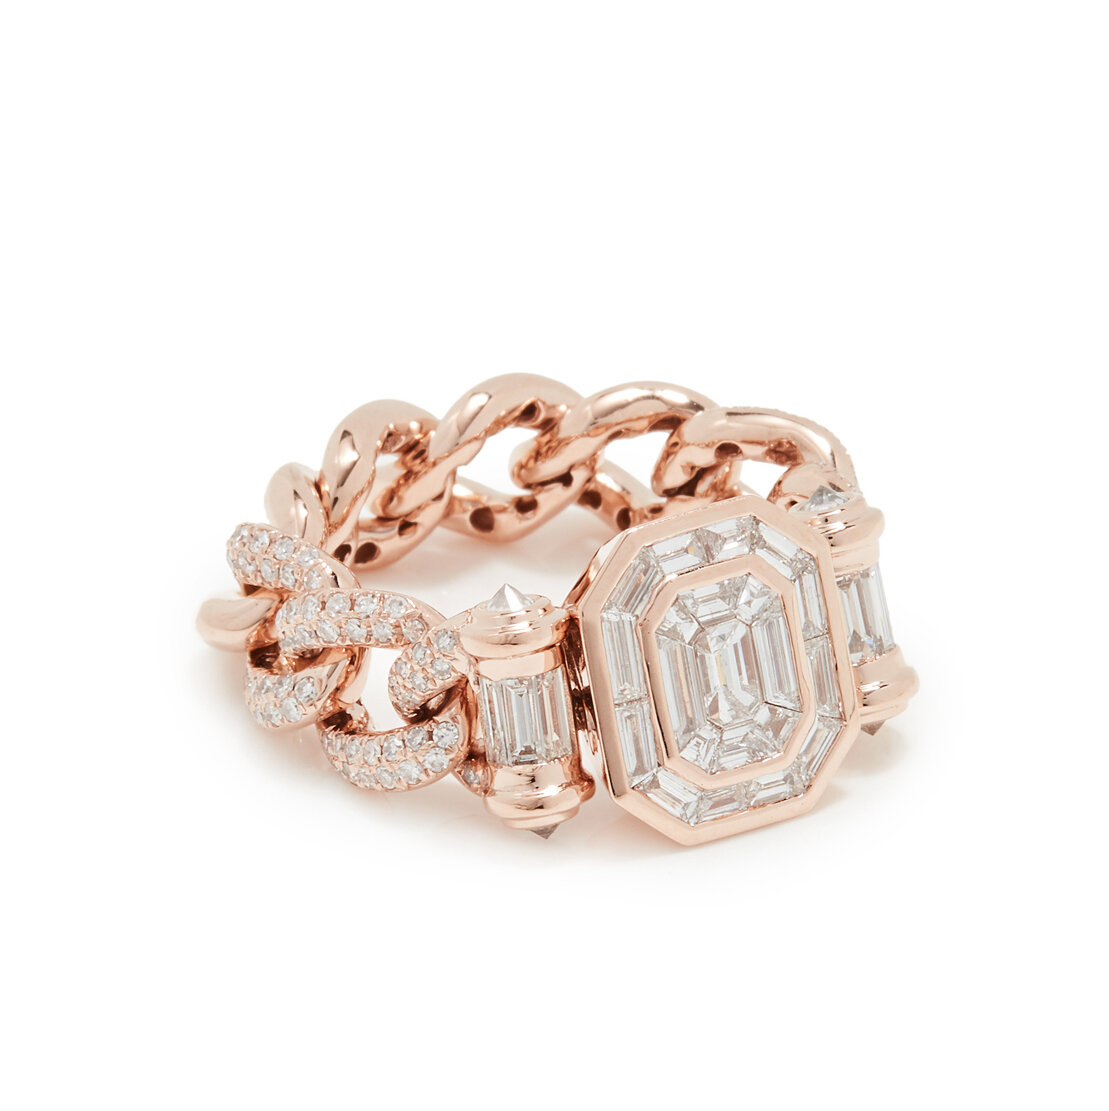 Shay Jewelry 18k Diamond Halo Link Ring, $9,800